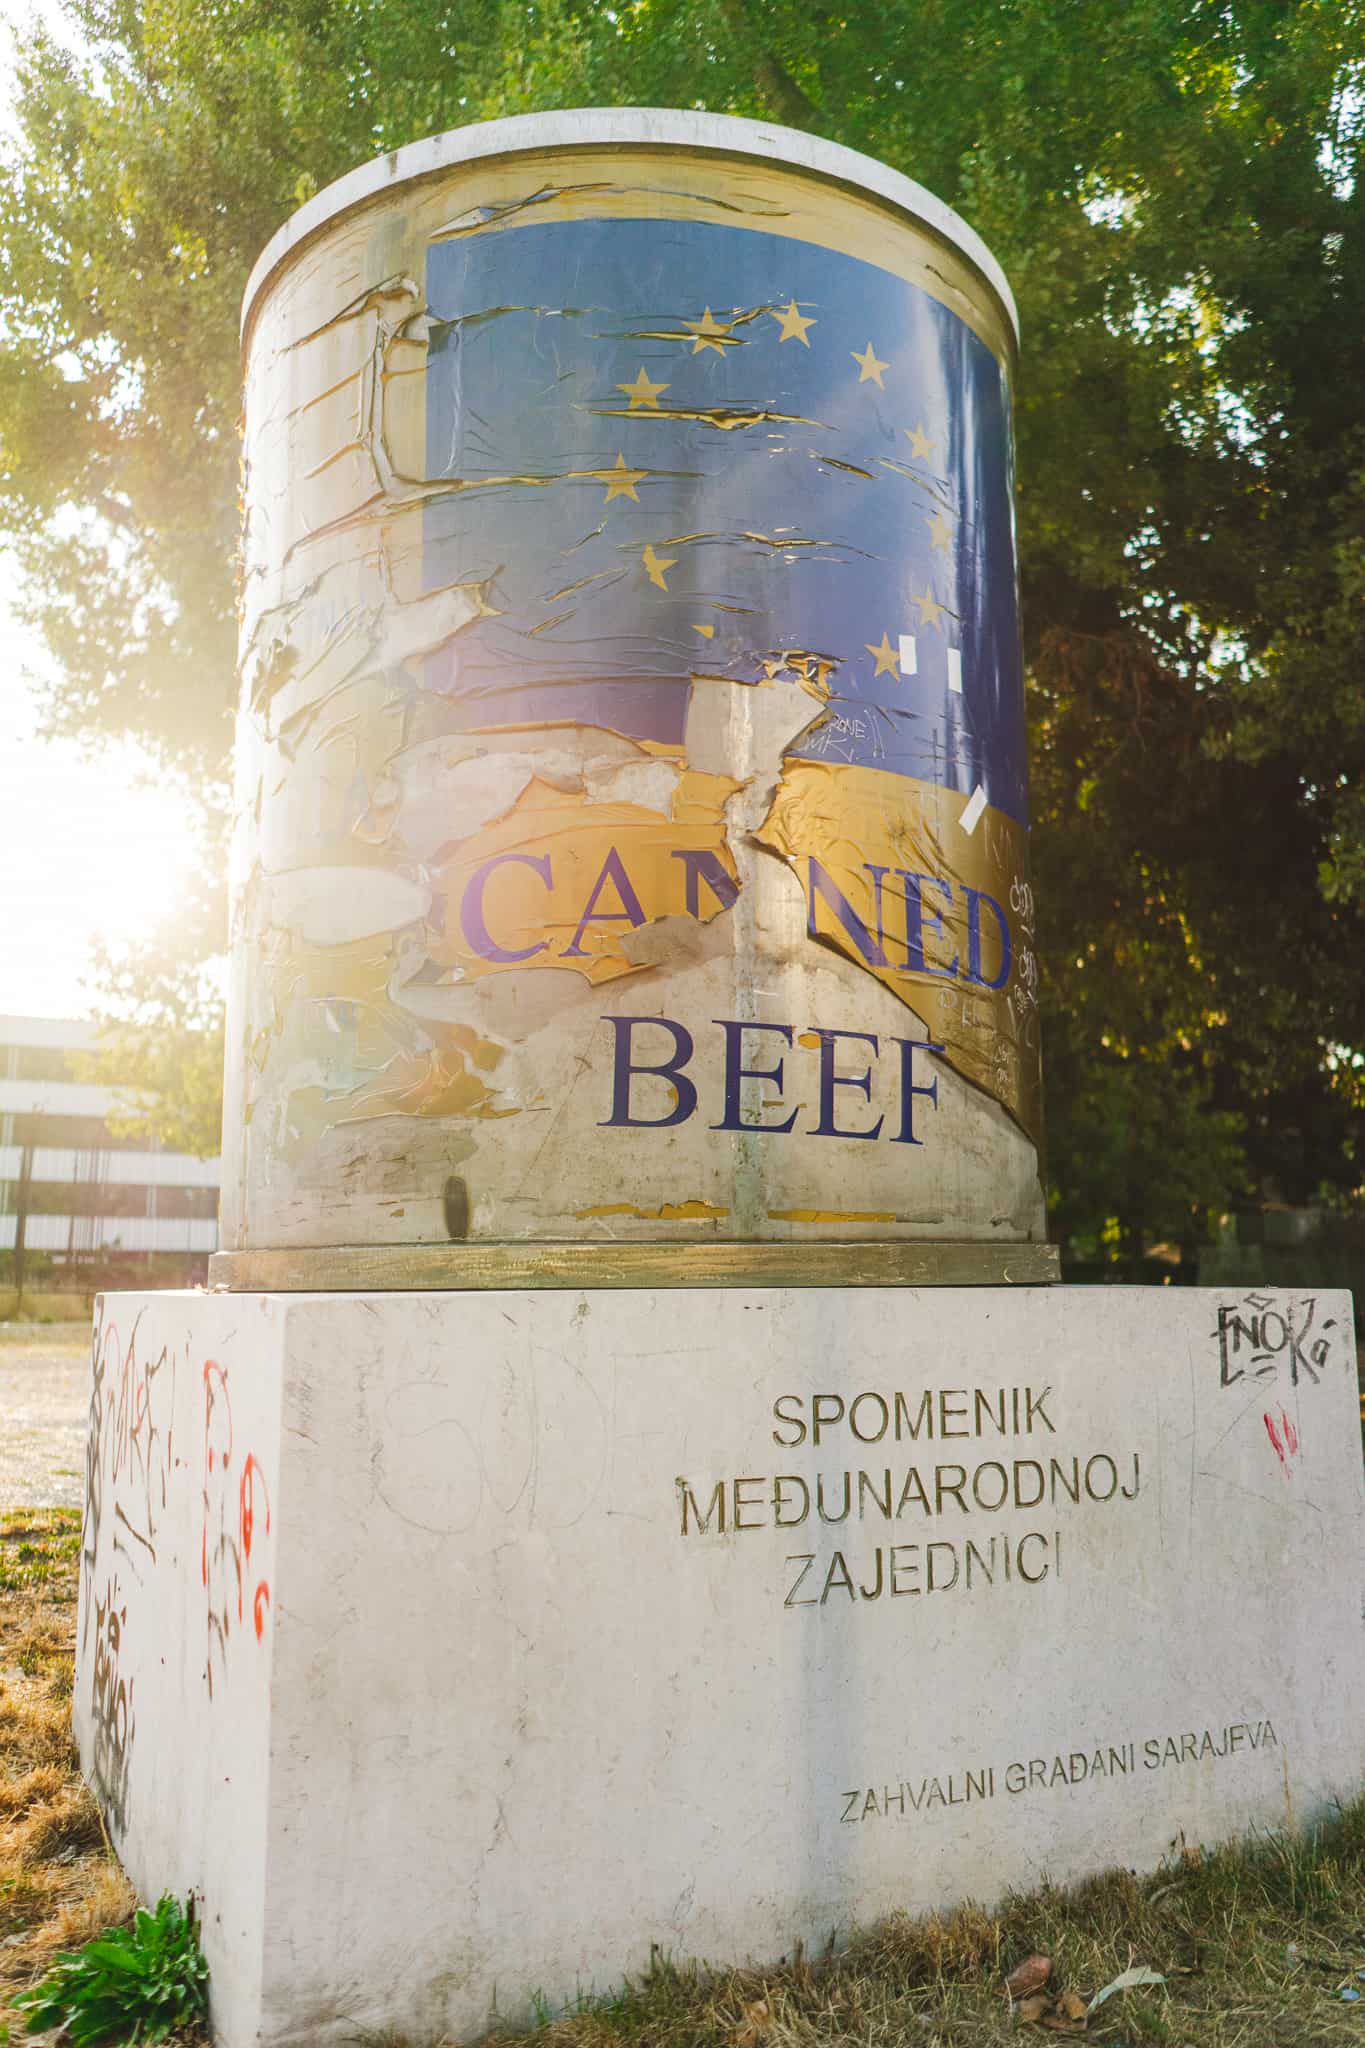 Canned beef sculpture in Sarajevo Bosnia and Herzegovina